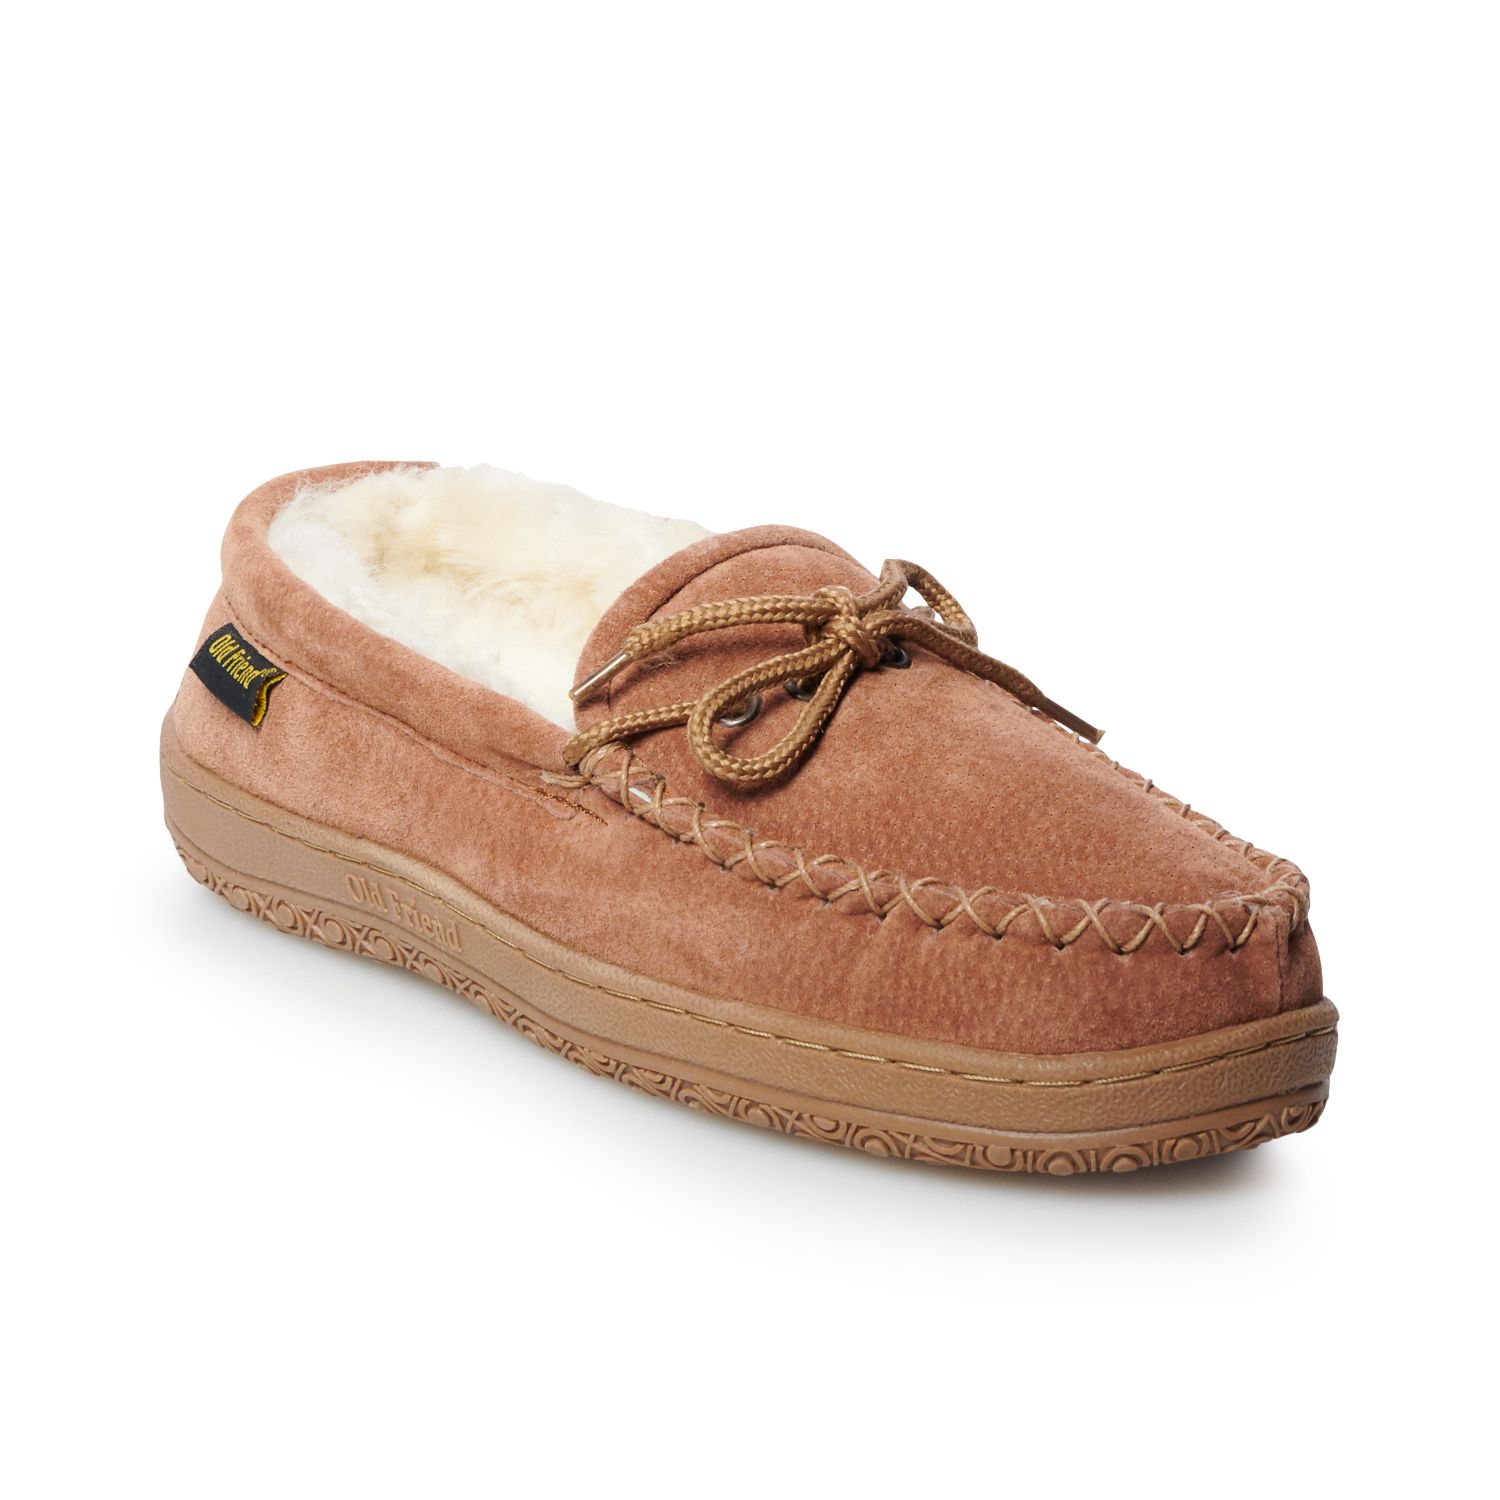 Old Friend Footwear Loafer Moccasin 